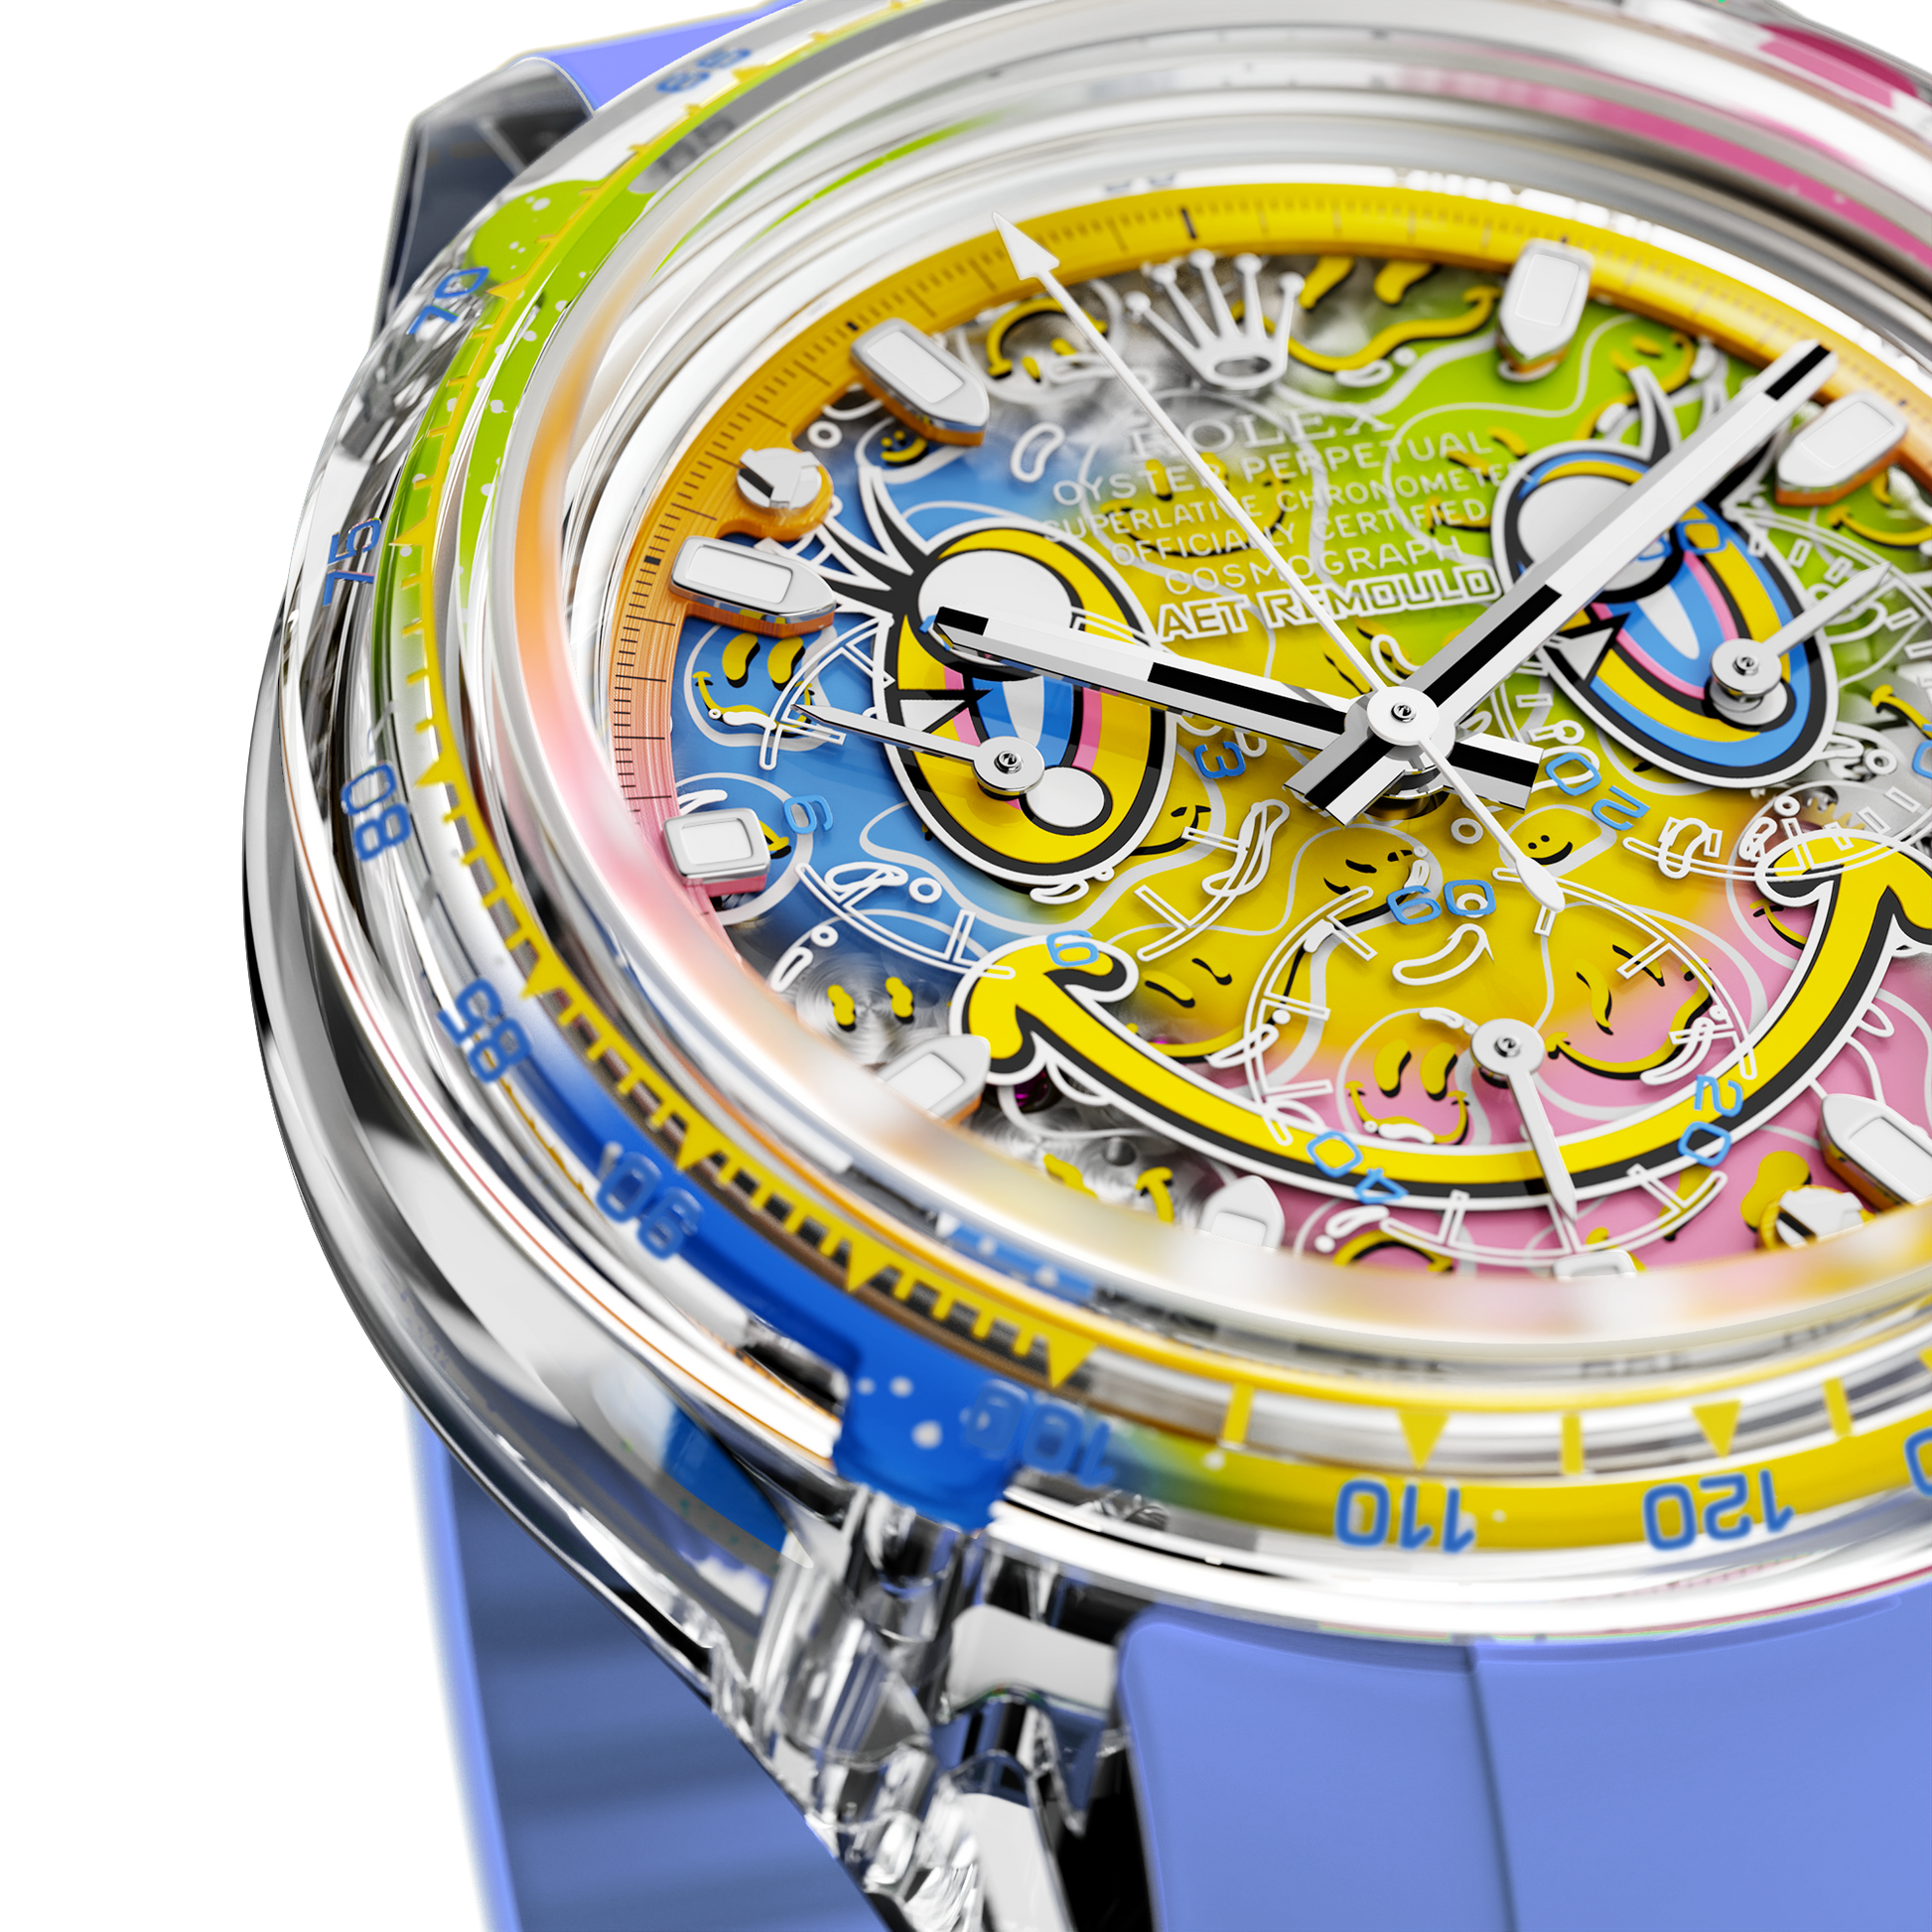 Rolex Daytona AET Remould SMILE Sapphire Watch 劳力士迪通拿 蓝宝石水晶透明手表 | WORLDTIMER